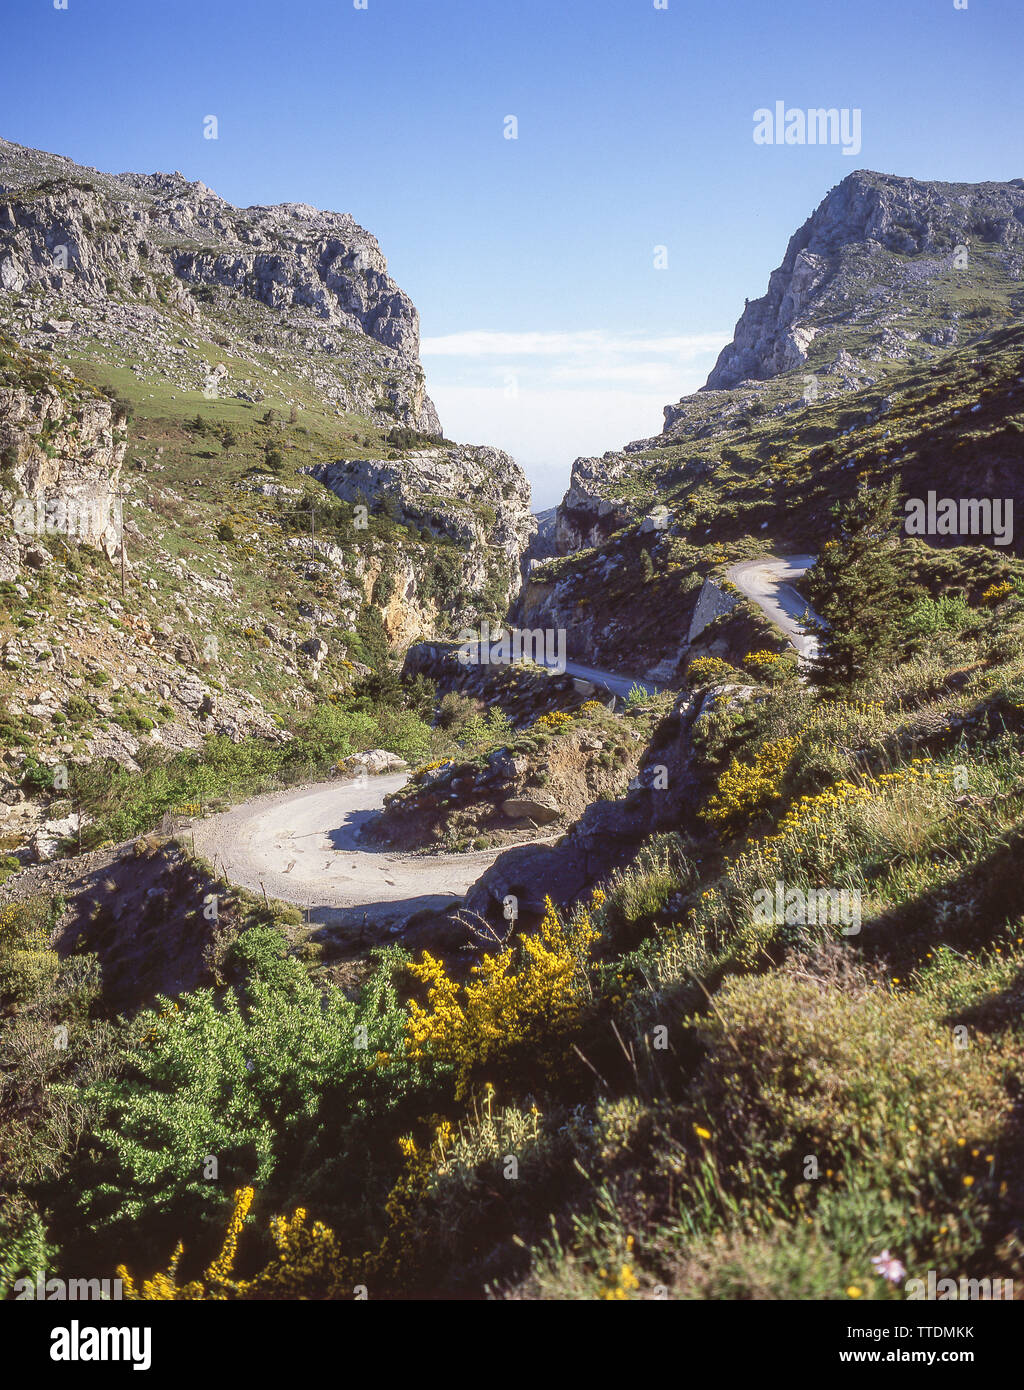 Kurvenreiche Straße in Stakia Berge, chanai Region, Kreta (Kriti), Griechenland Stockfoto